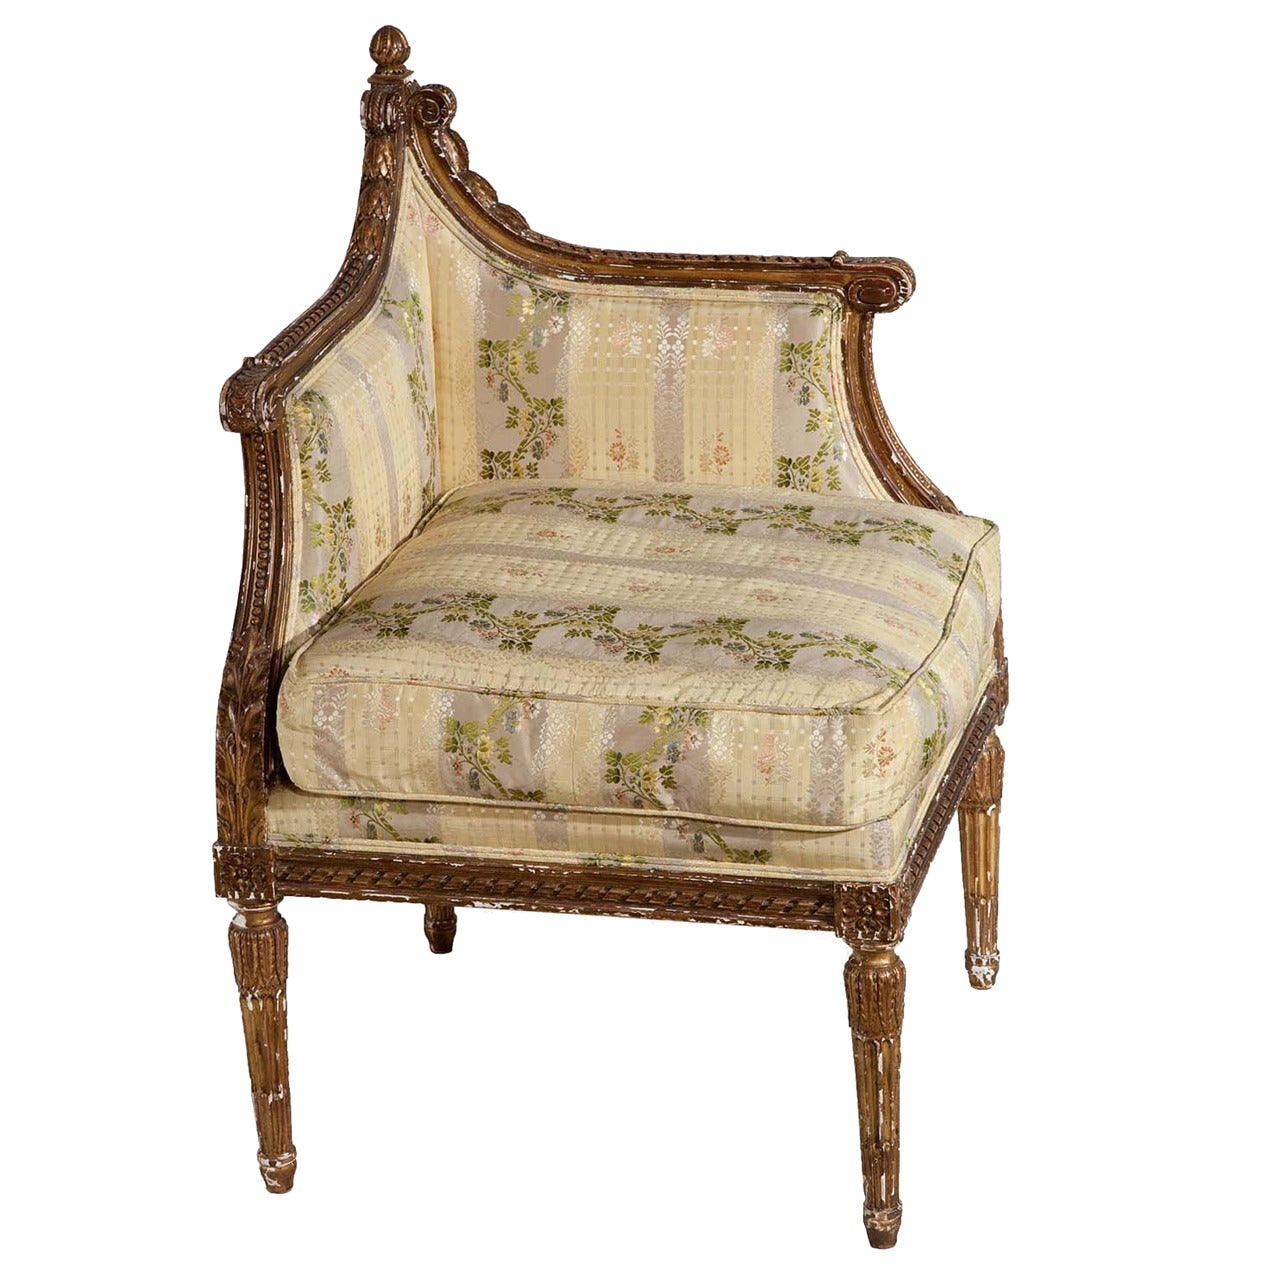 18thC French gilt wood corner chair